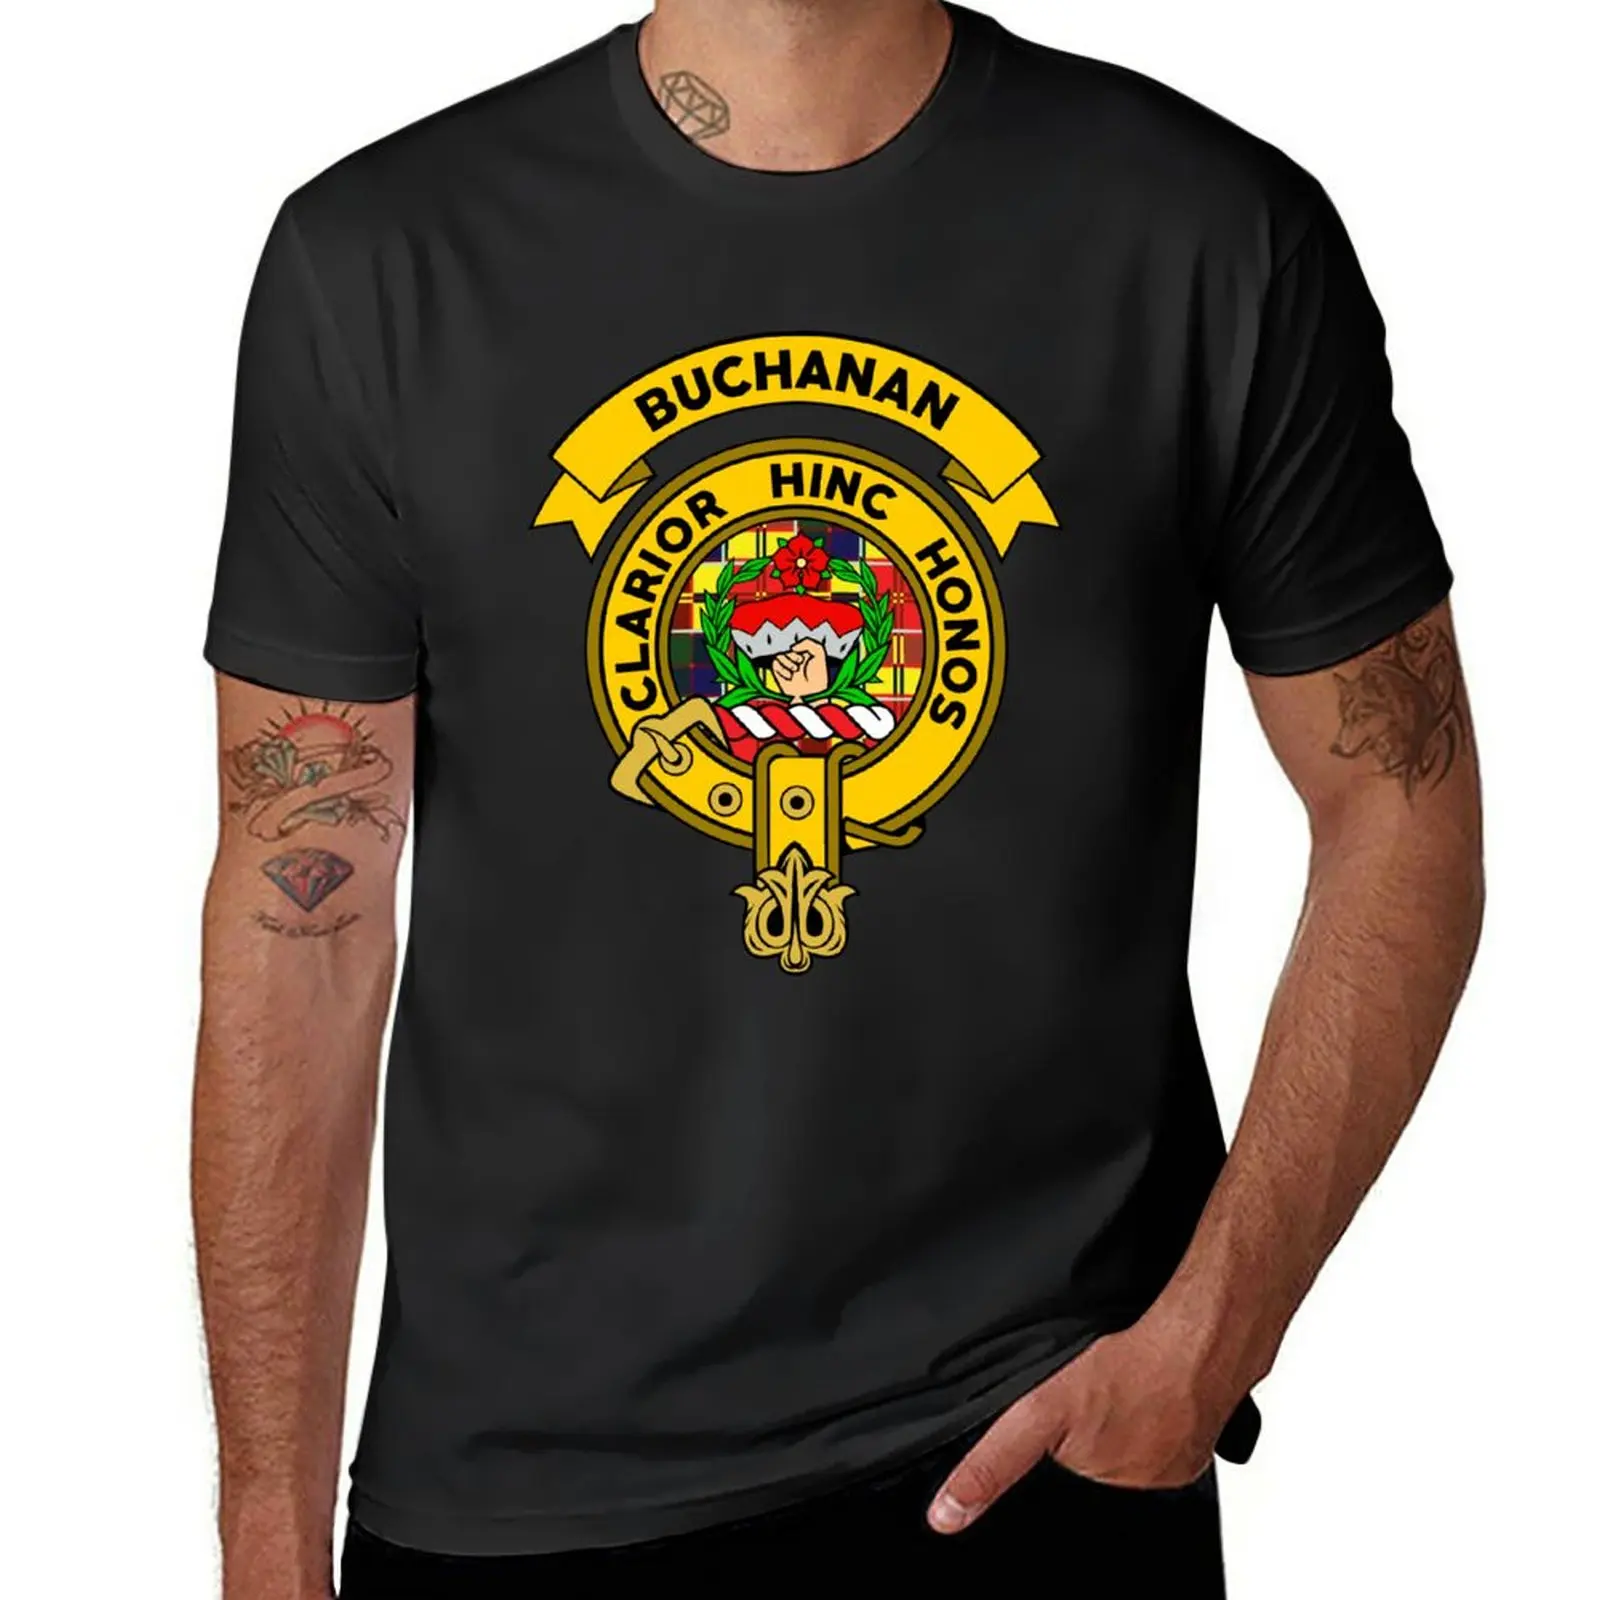 Buchanan-Camiseta de tartán con insignia de Clan para hombre, camisa blanca con estampado animal